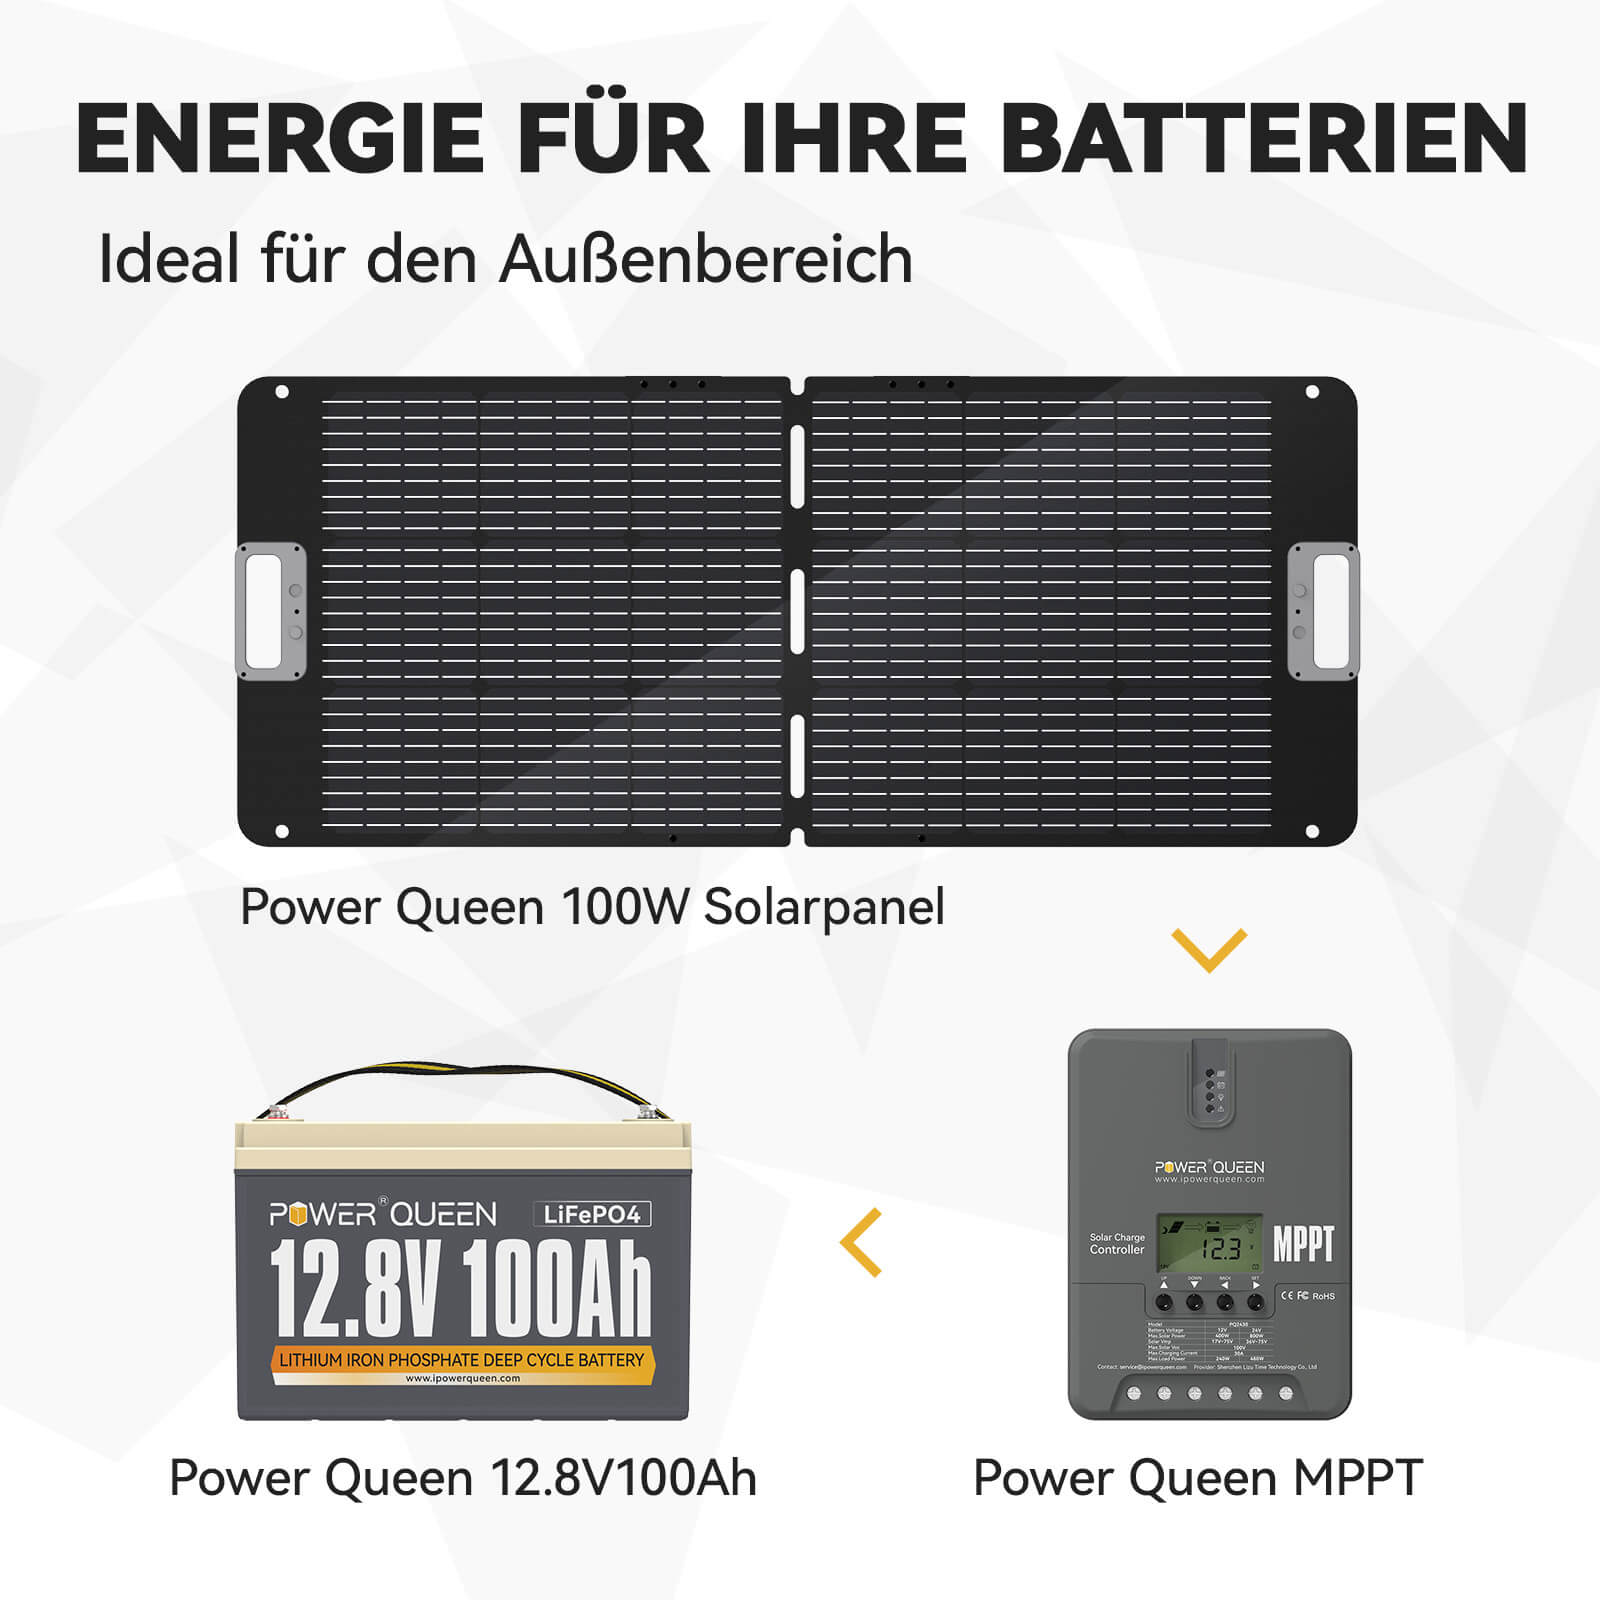 Power Queen 100W portable solar panel for gardens, balconies, RVs, camping